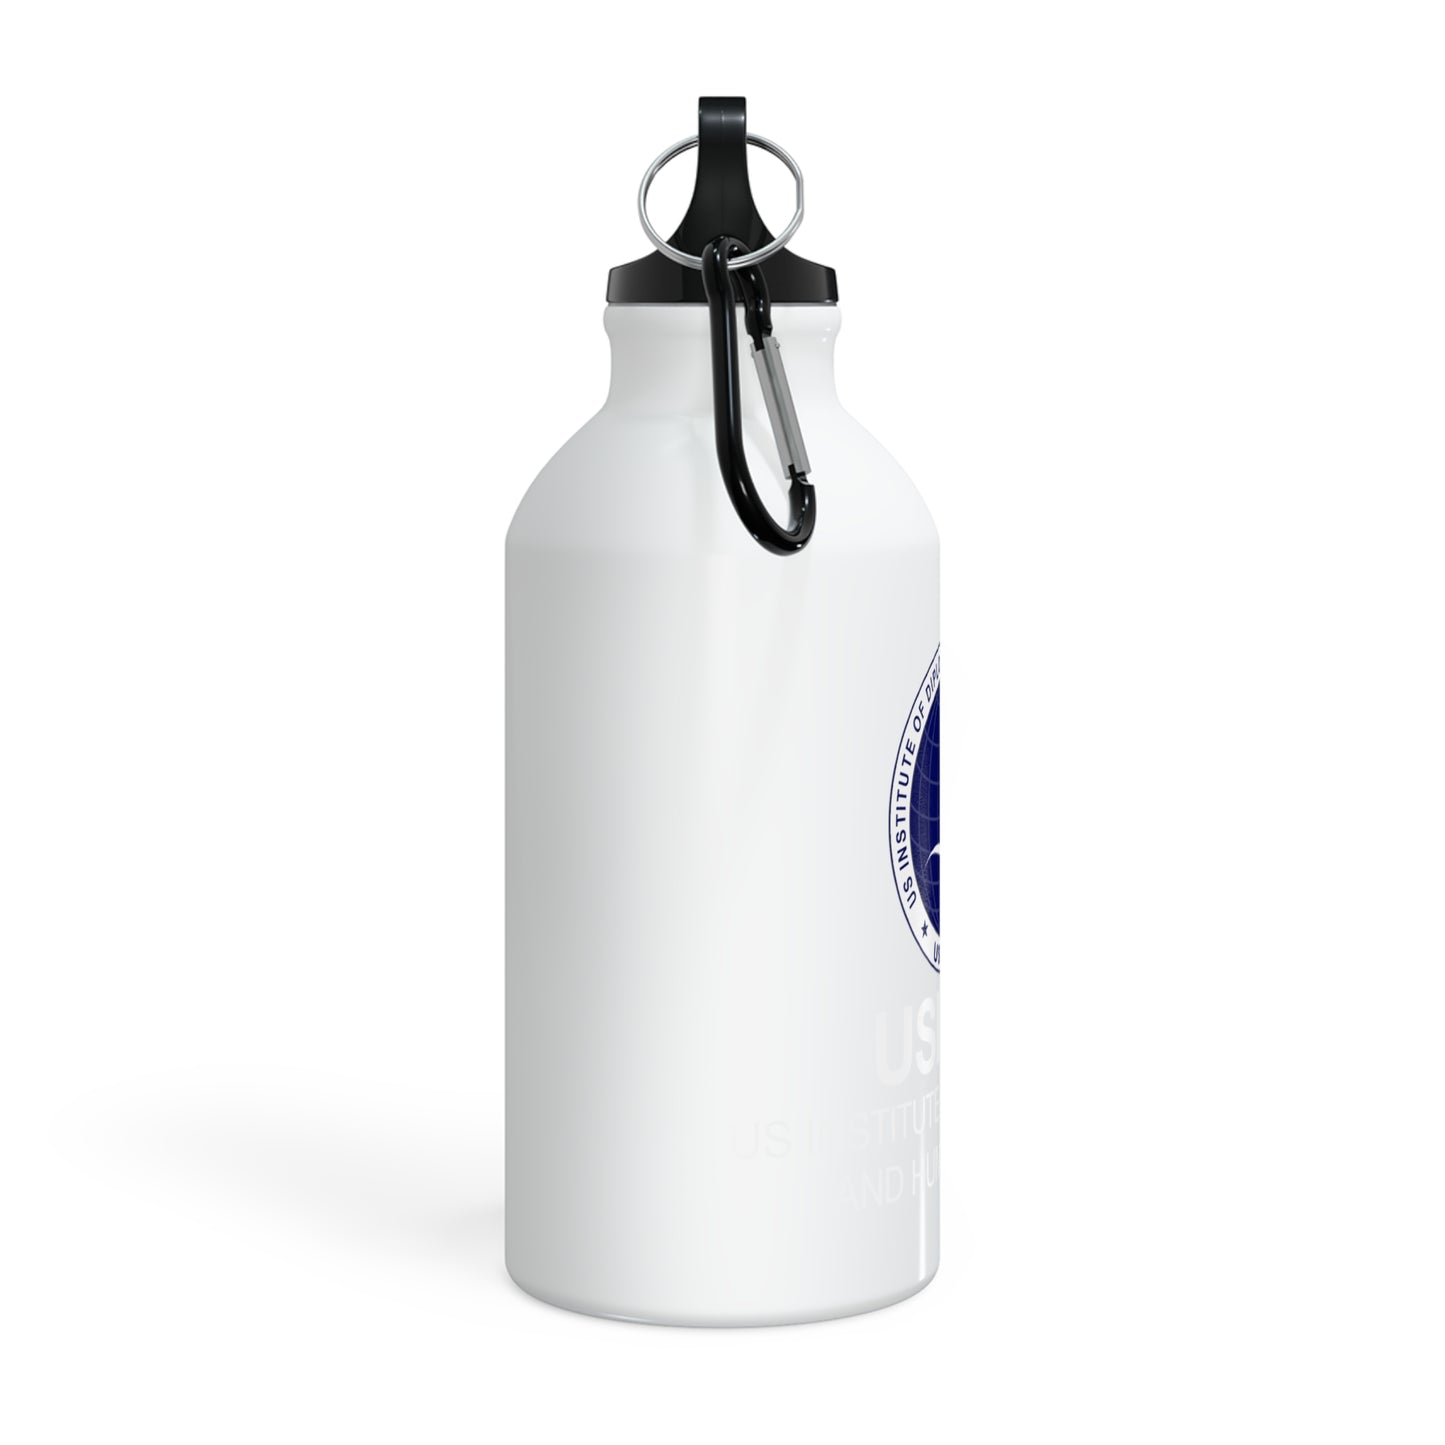 USIDHR Hydration Adventure Bottle